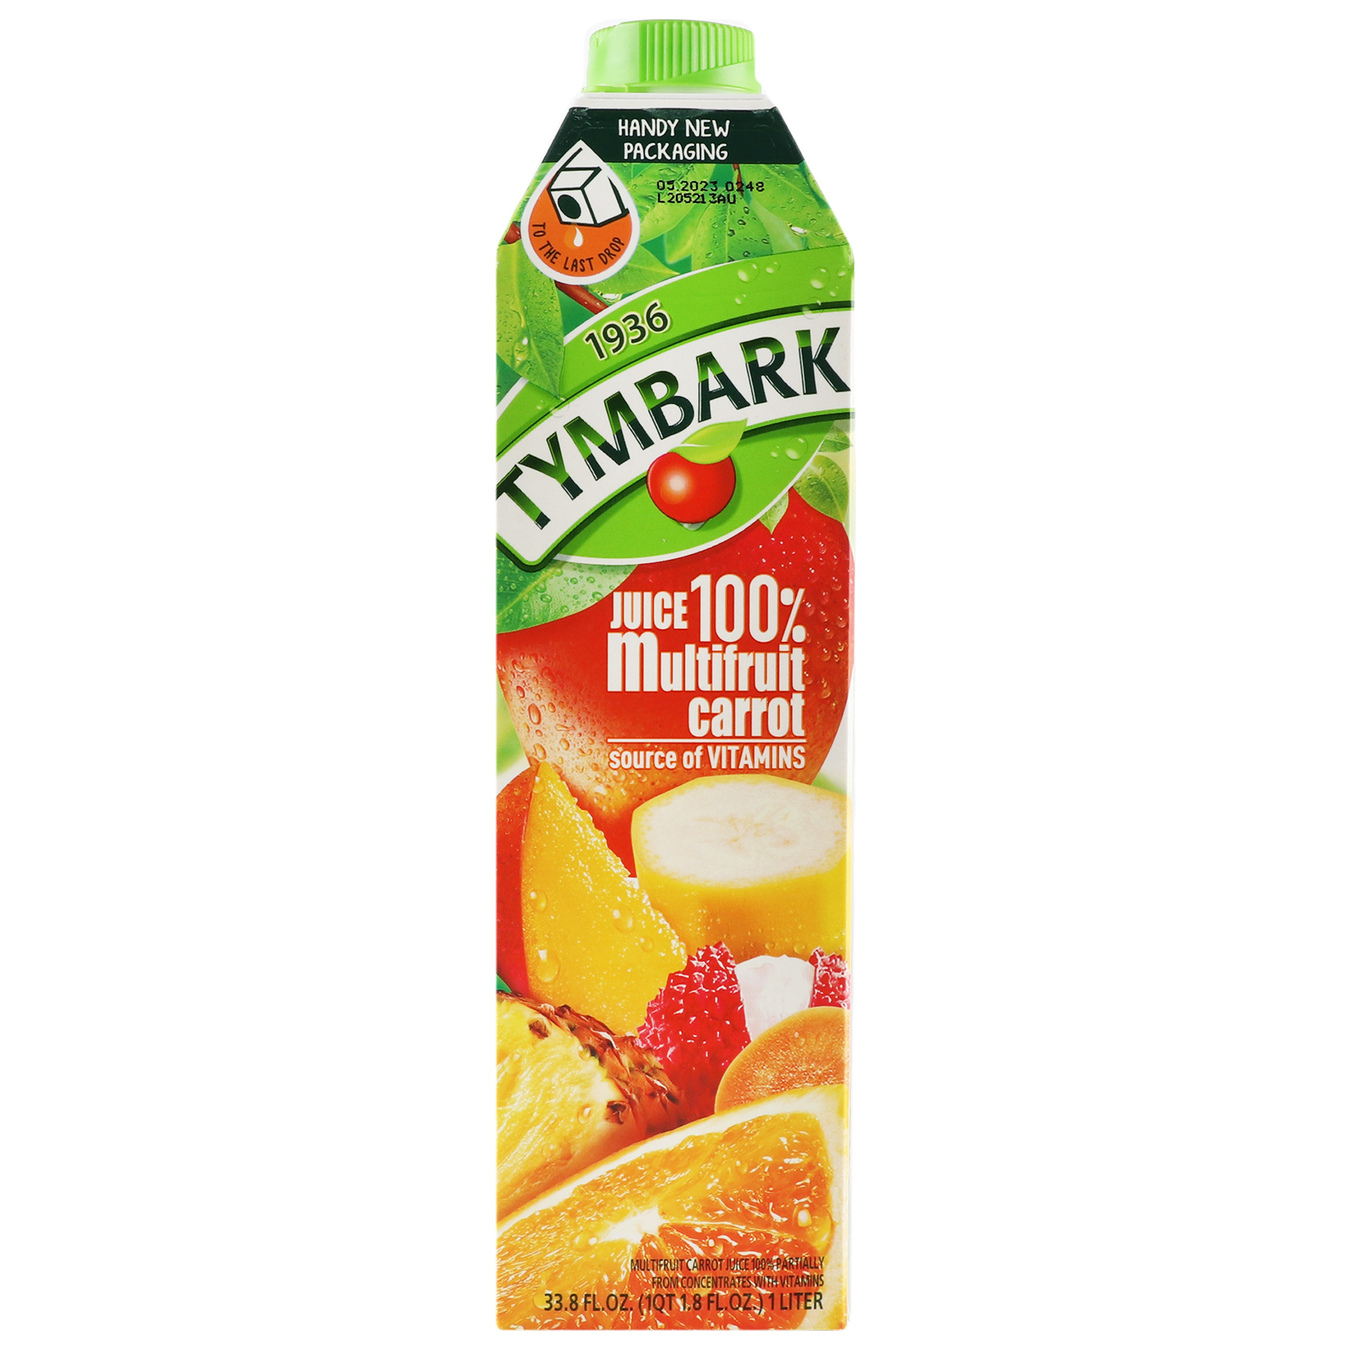 Tymbark multifruit carrot juice 1liter 5